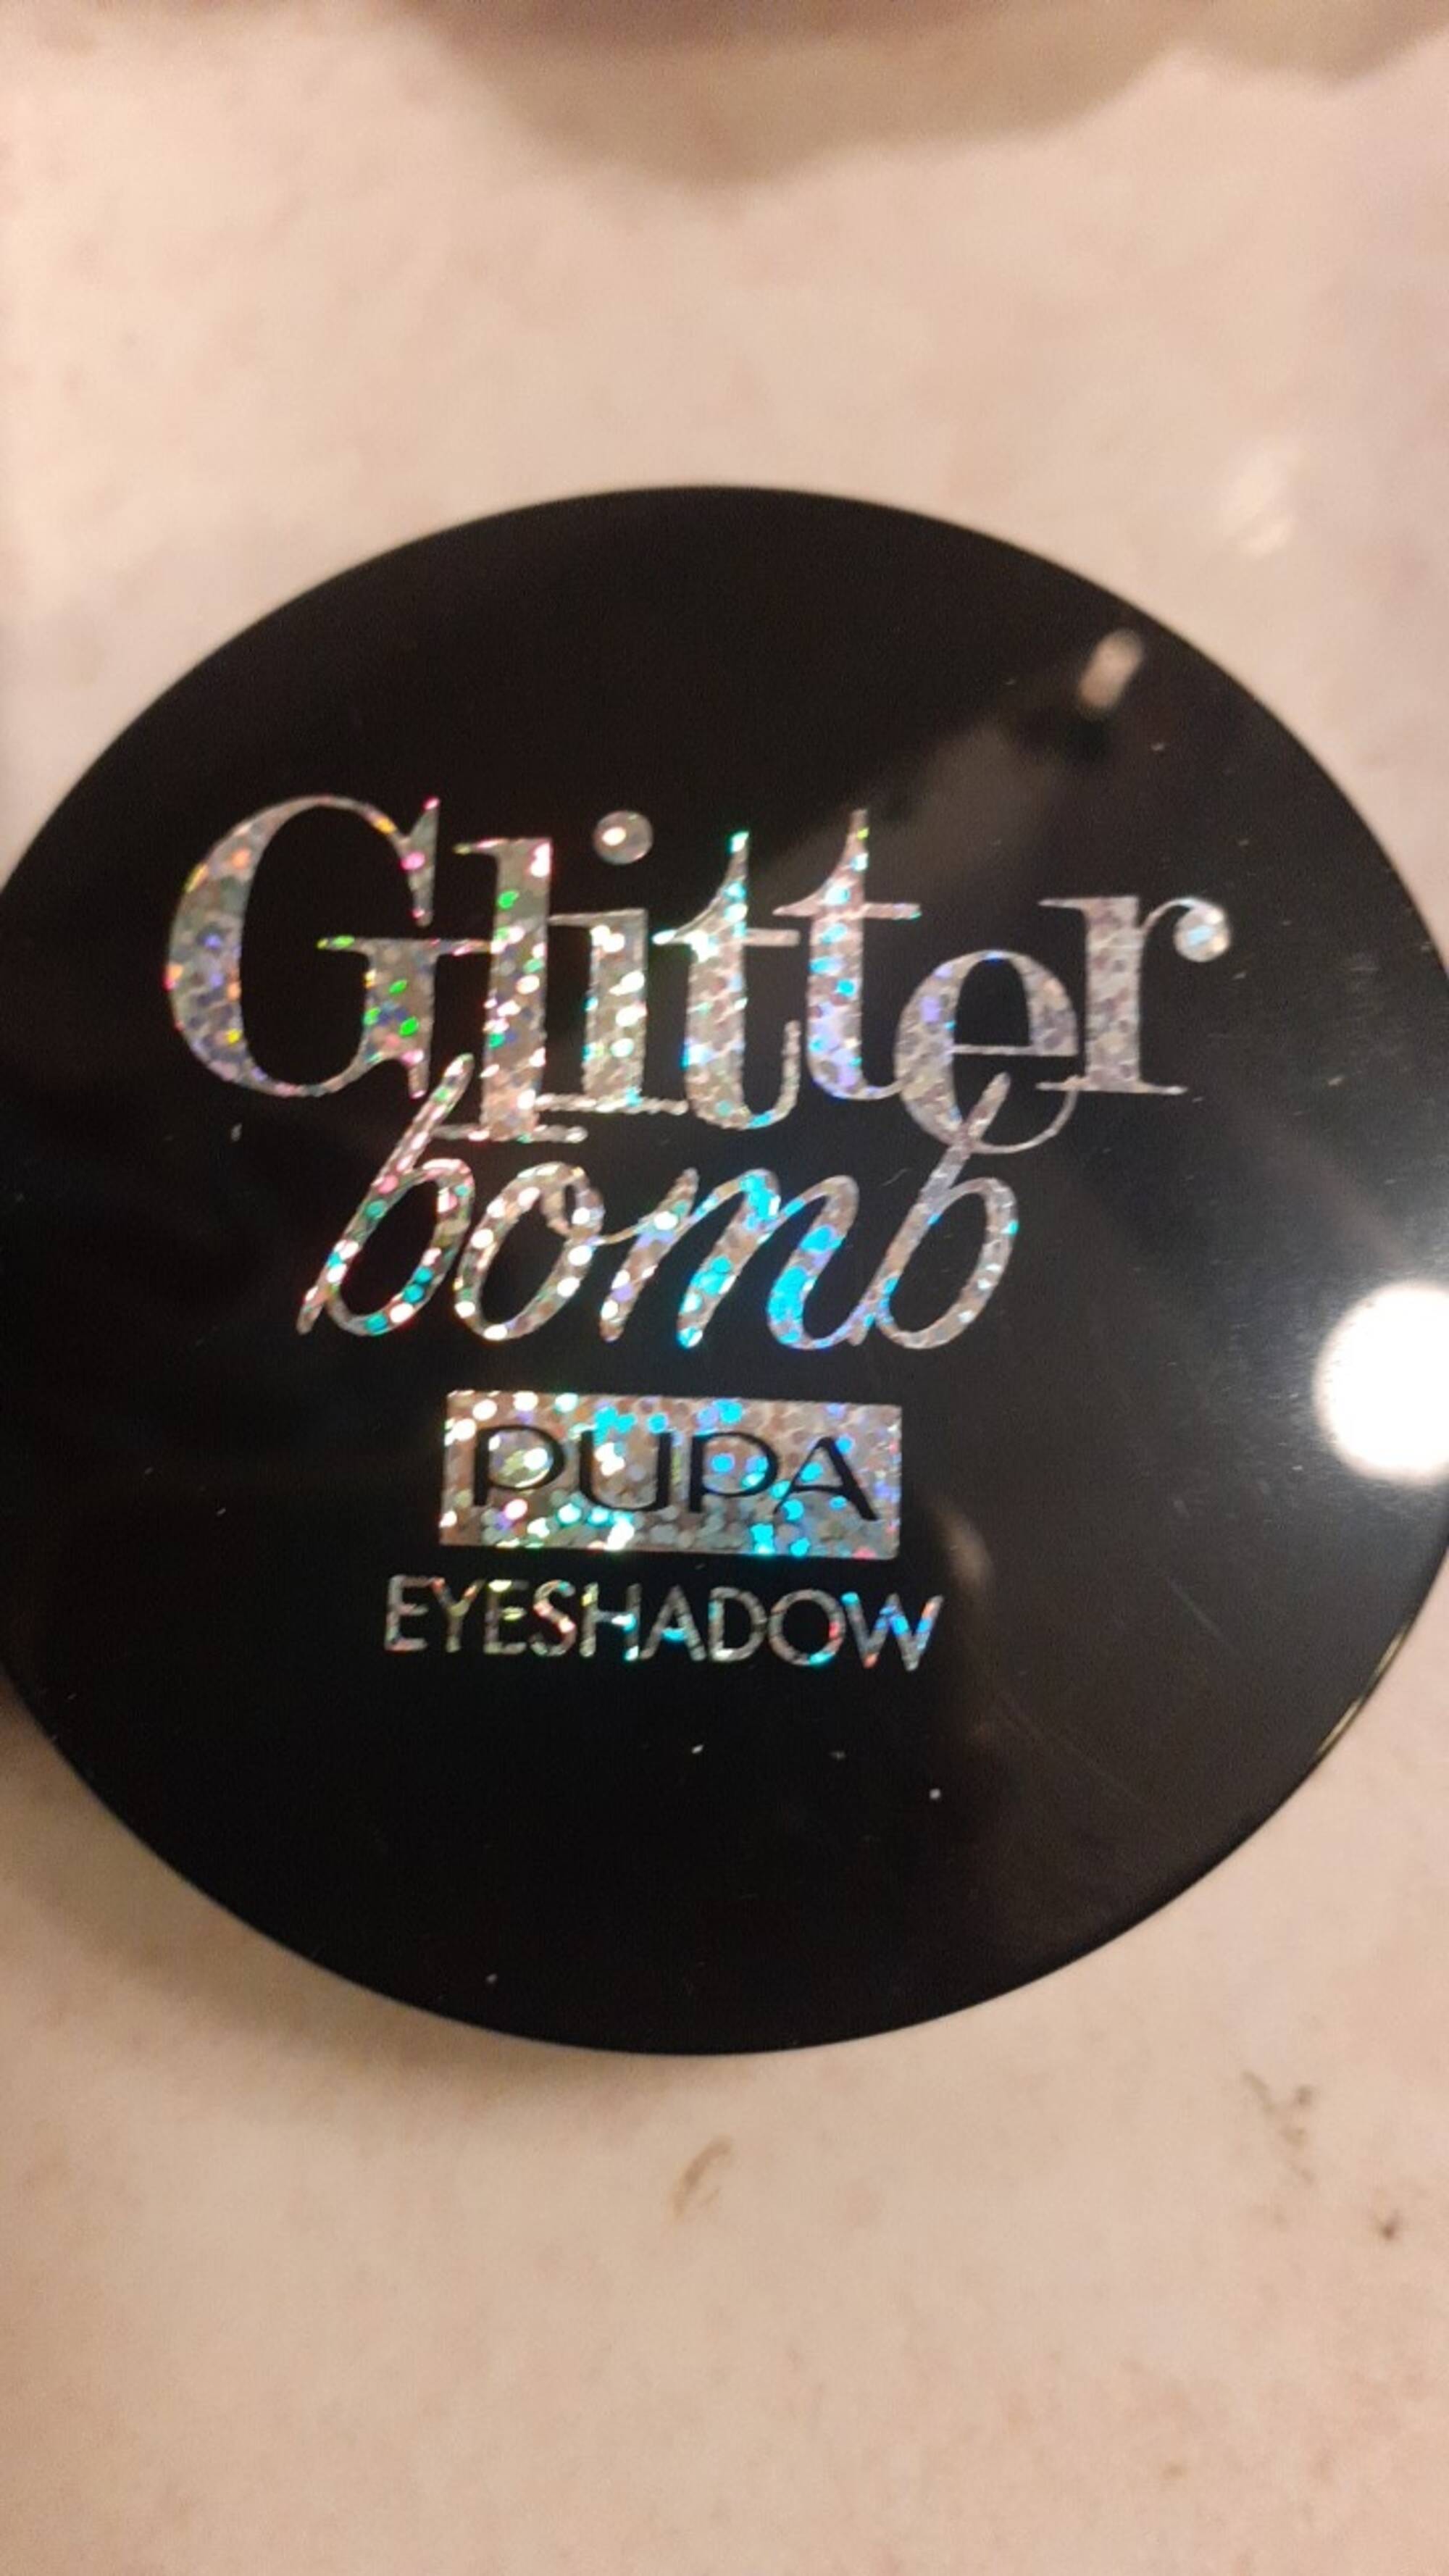 PUPA - Glitter bomb eyeshadow